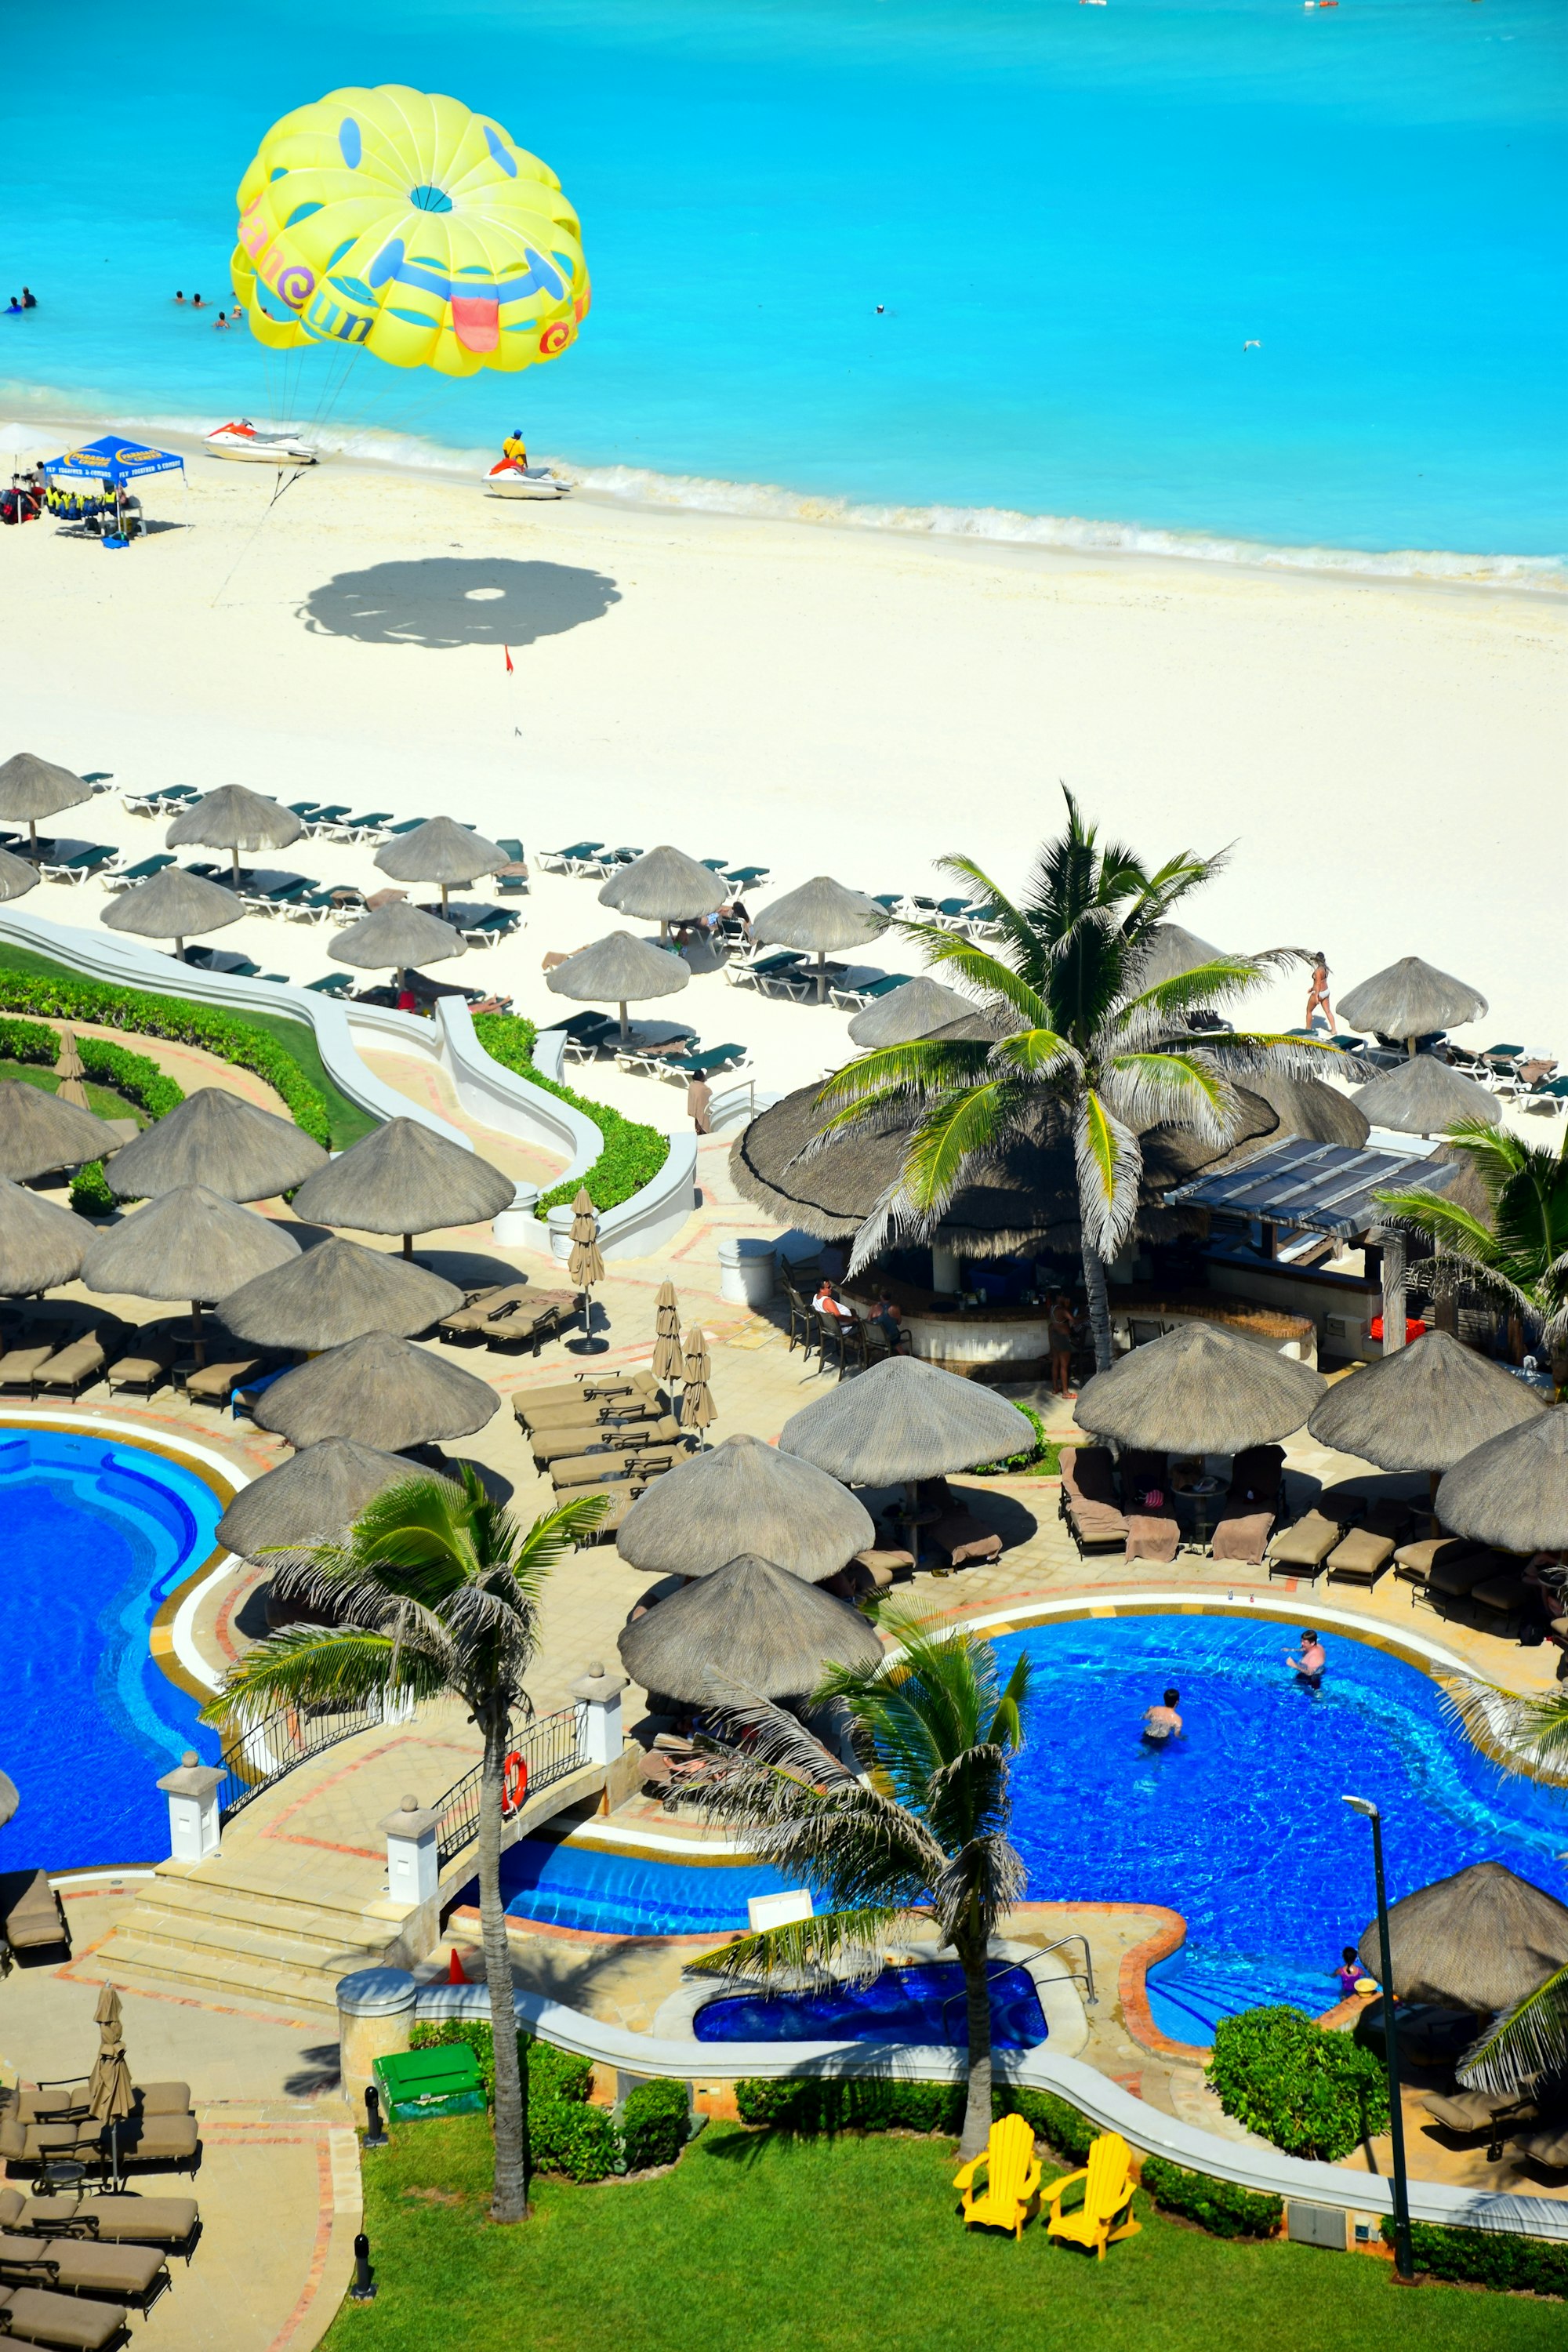 Cancun, a favorite destination for Americans